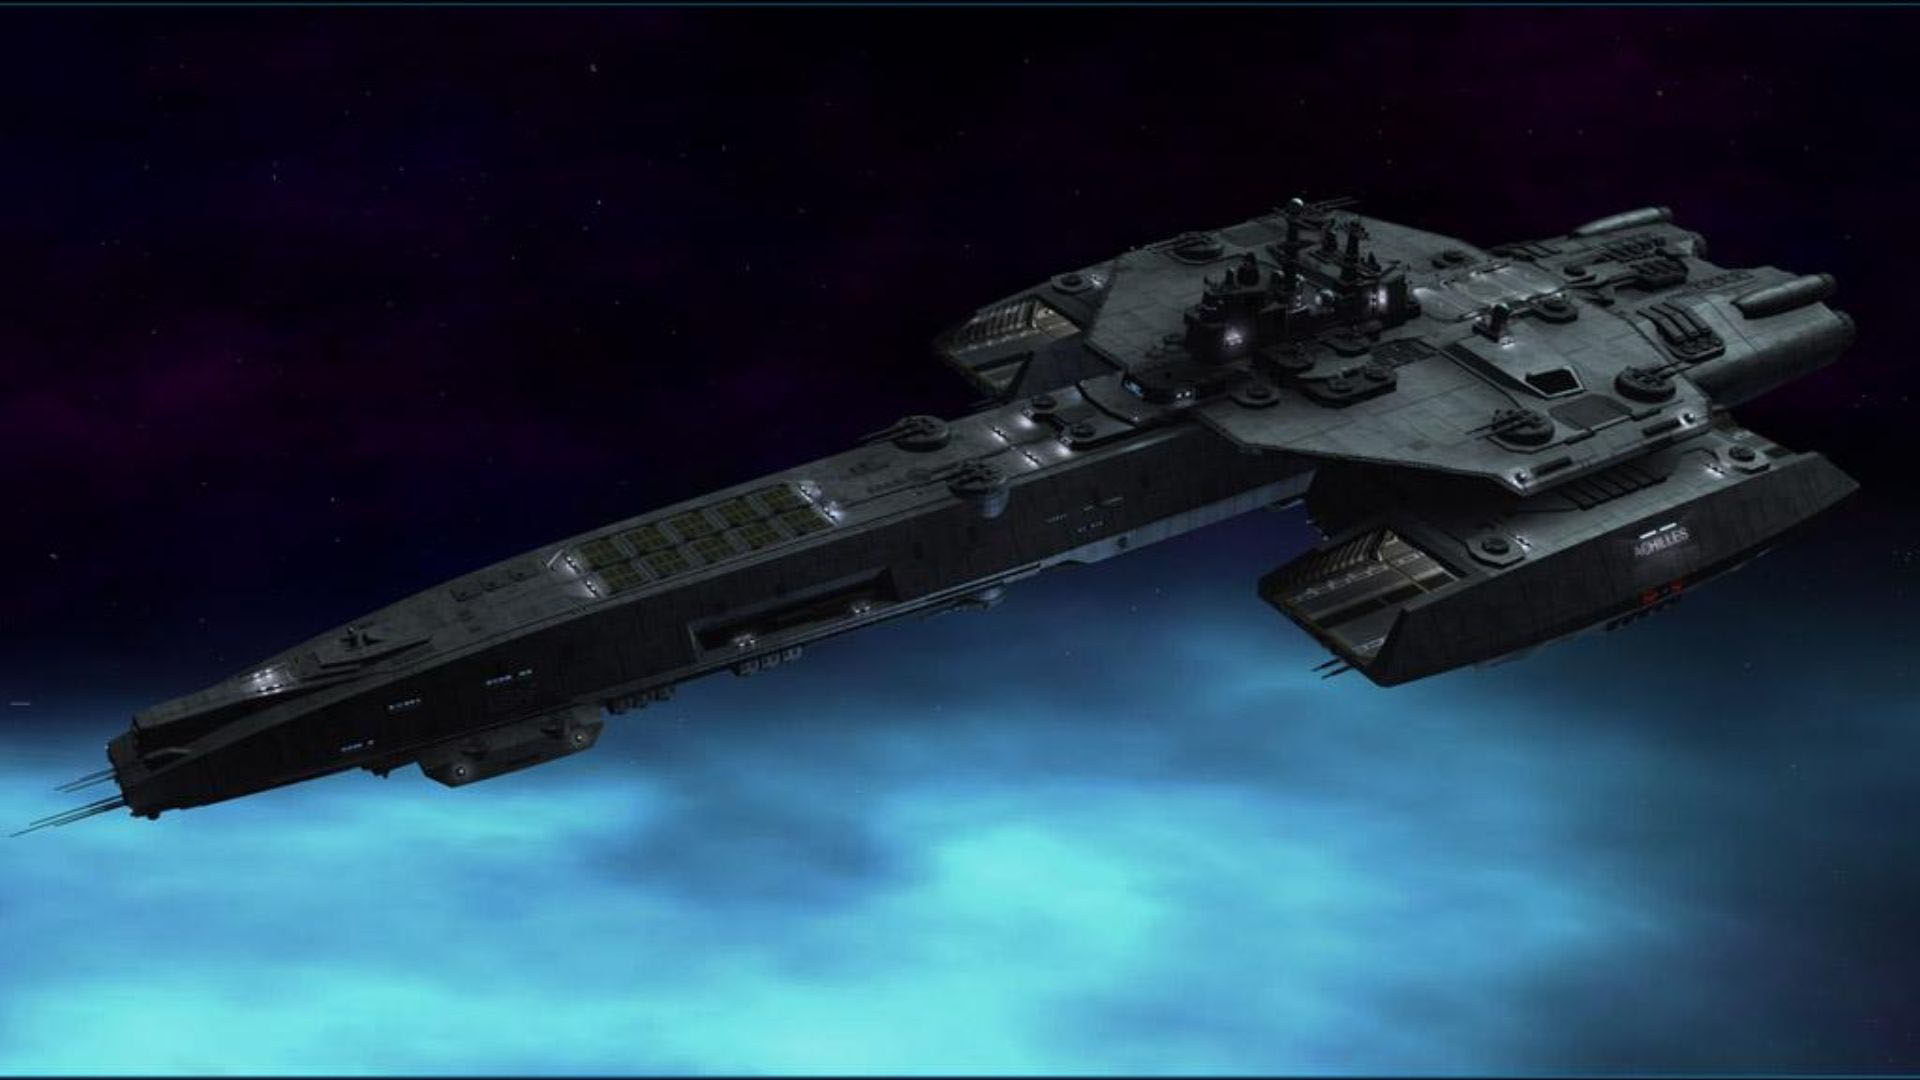 Designing ships. Звёздные врата SG-1 корабли. Звёздные врата карабли Таури. Звёздные врата корабли Таури концепт. Звездные врата корабль Ахиллес.